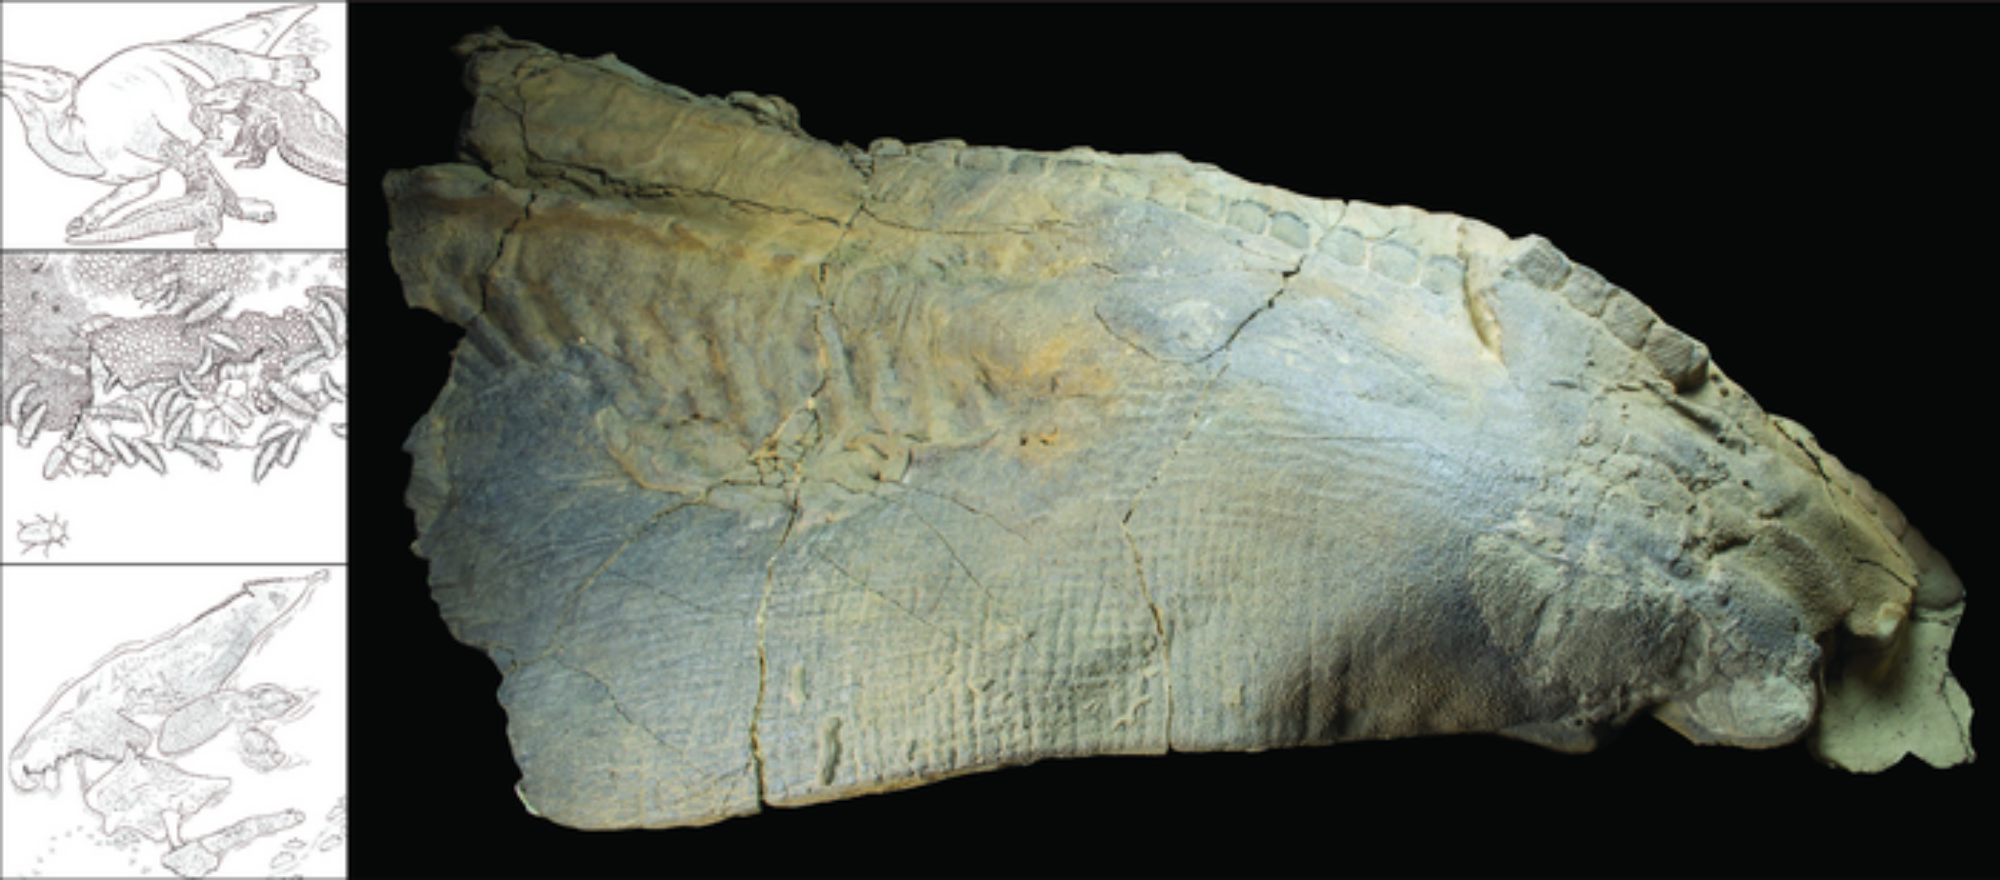 Método único de momificación descubierto en dinosaurio